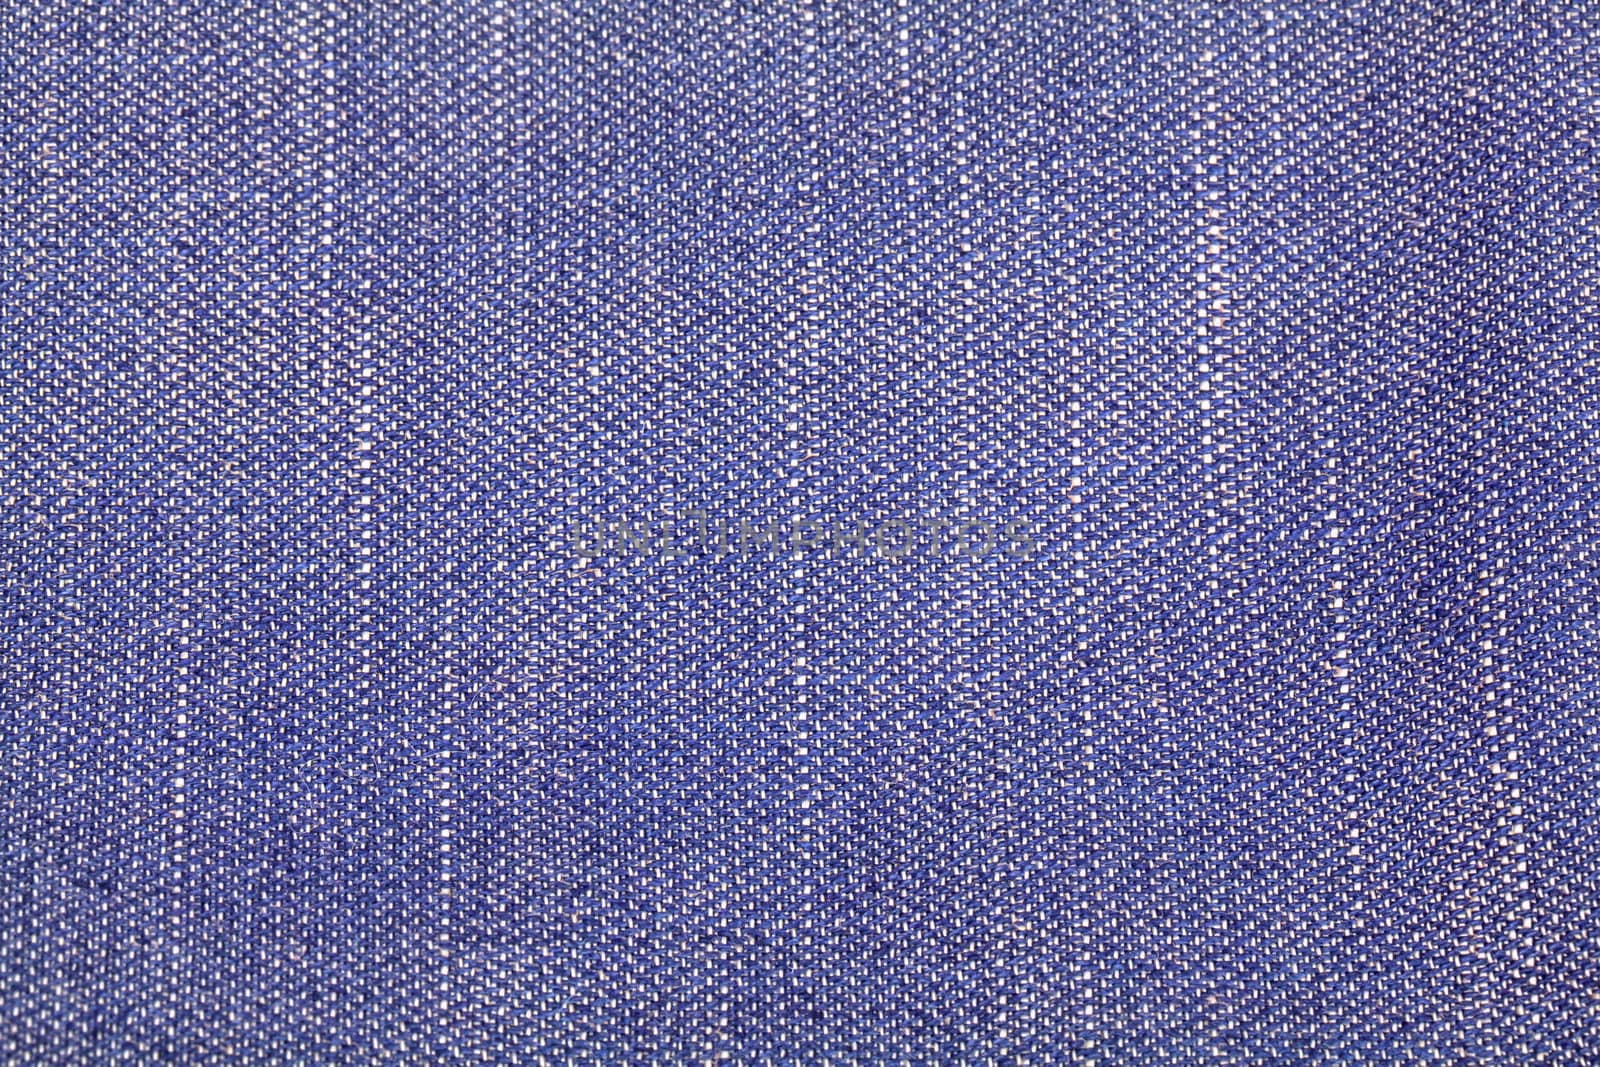 Blue color jeans fabric texture background